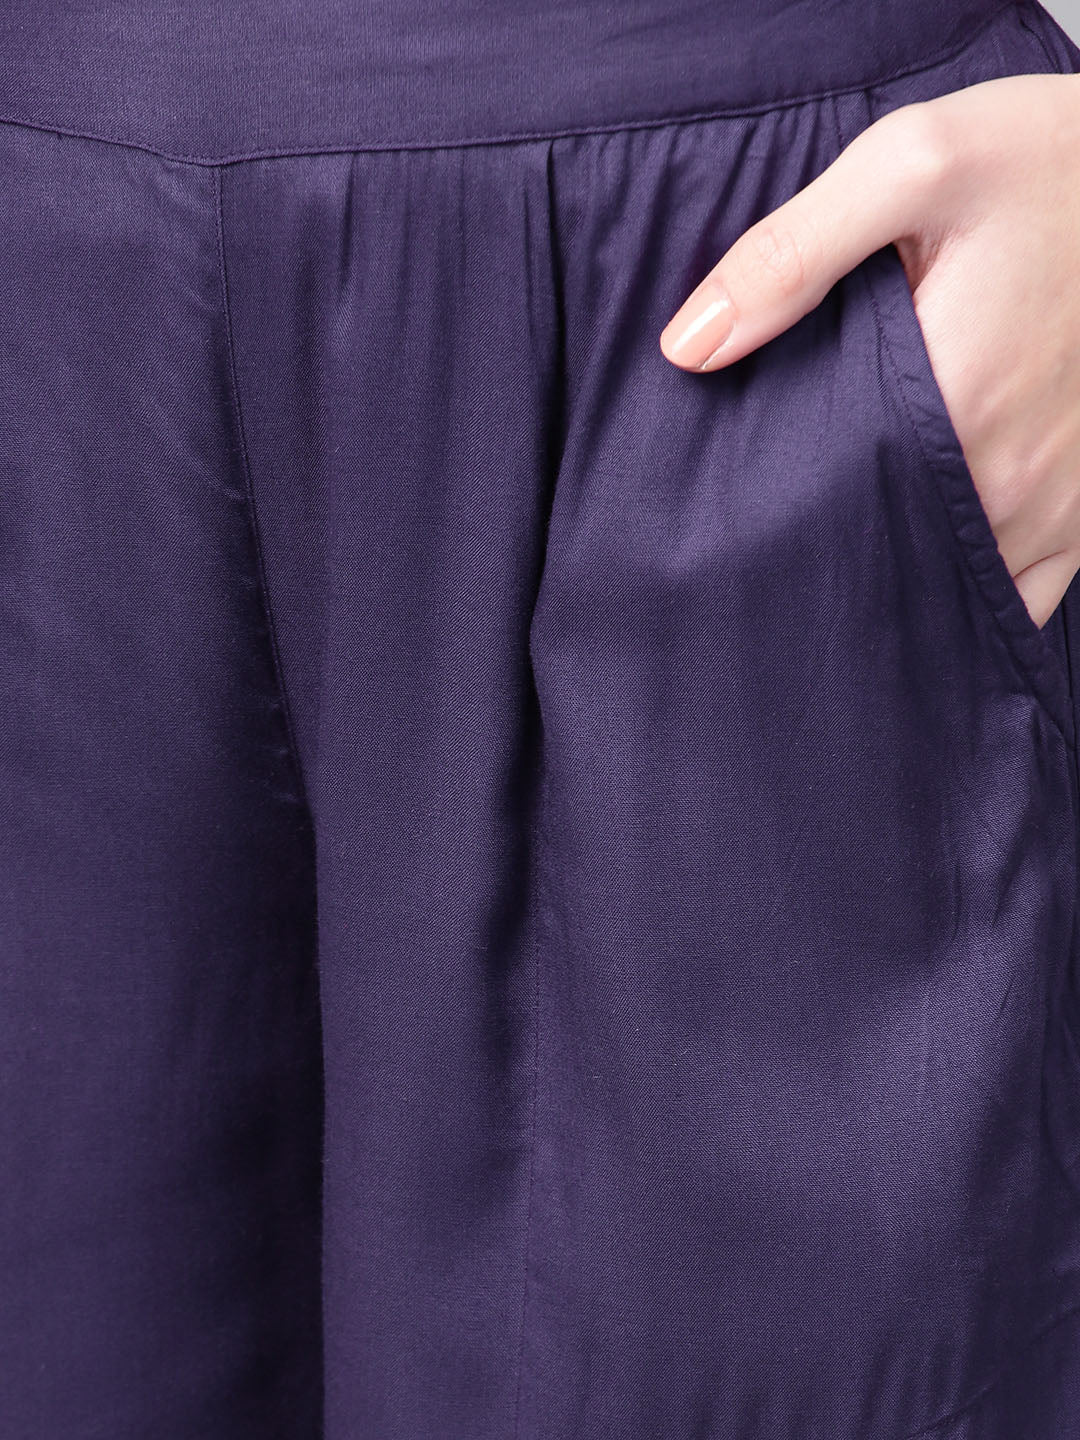 Purple Rayon Formal Palazzo Pants with Pockets